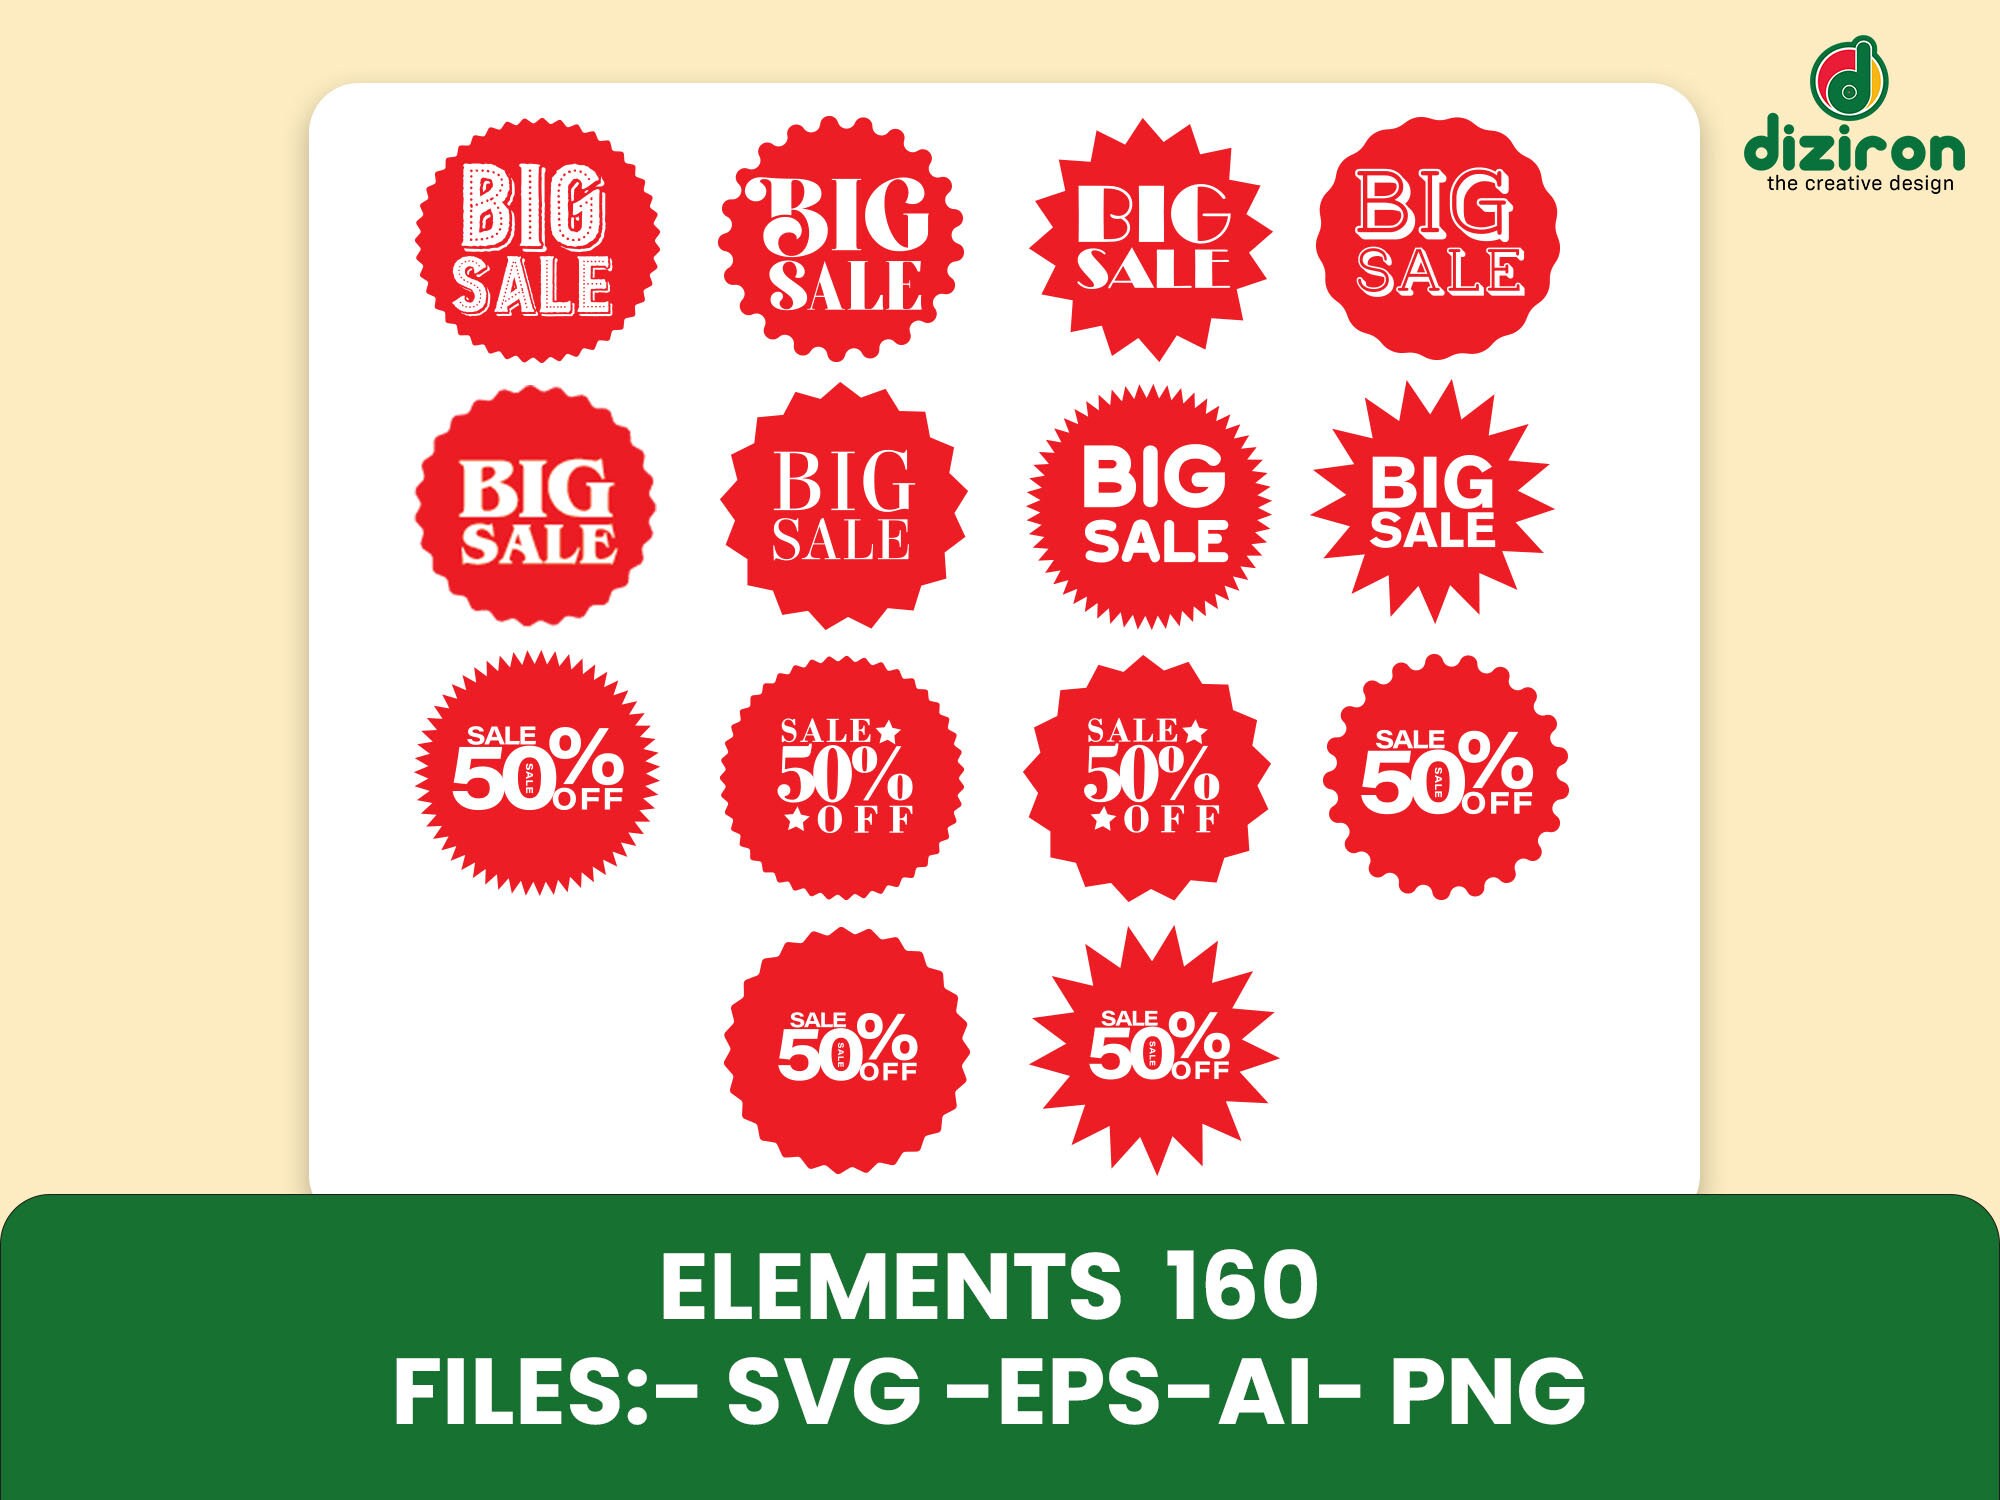 Garage Sale Stickers, Sale Stickers, Price Tag Stickers, Circle Stickers,  Garage Sale Labels, Printable Sale Labels Printable Sale Labels 1 